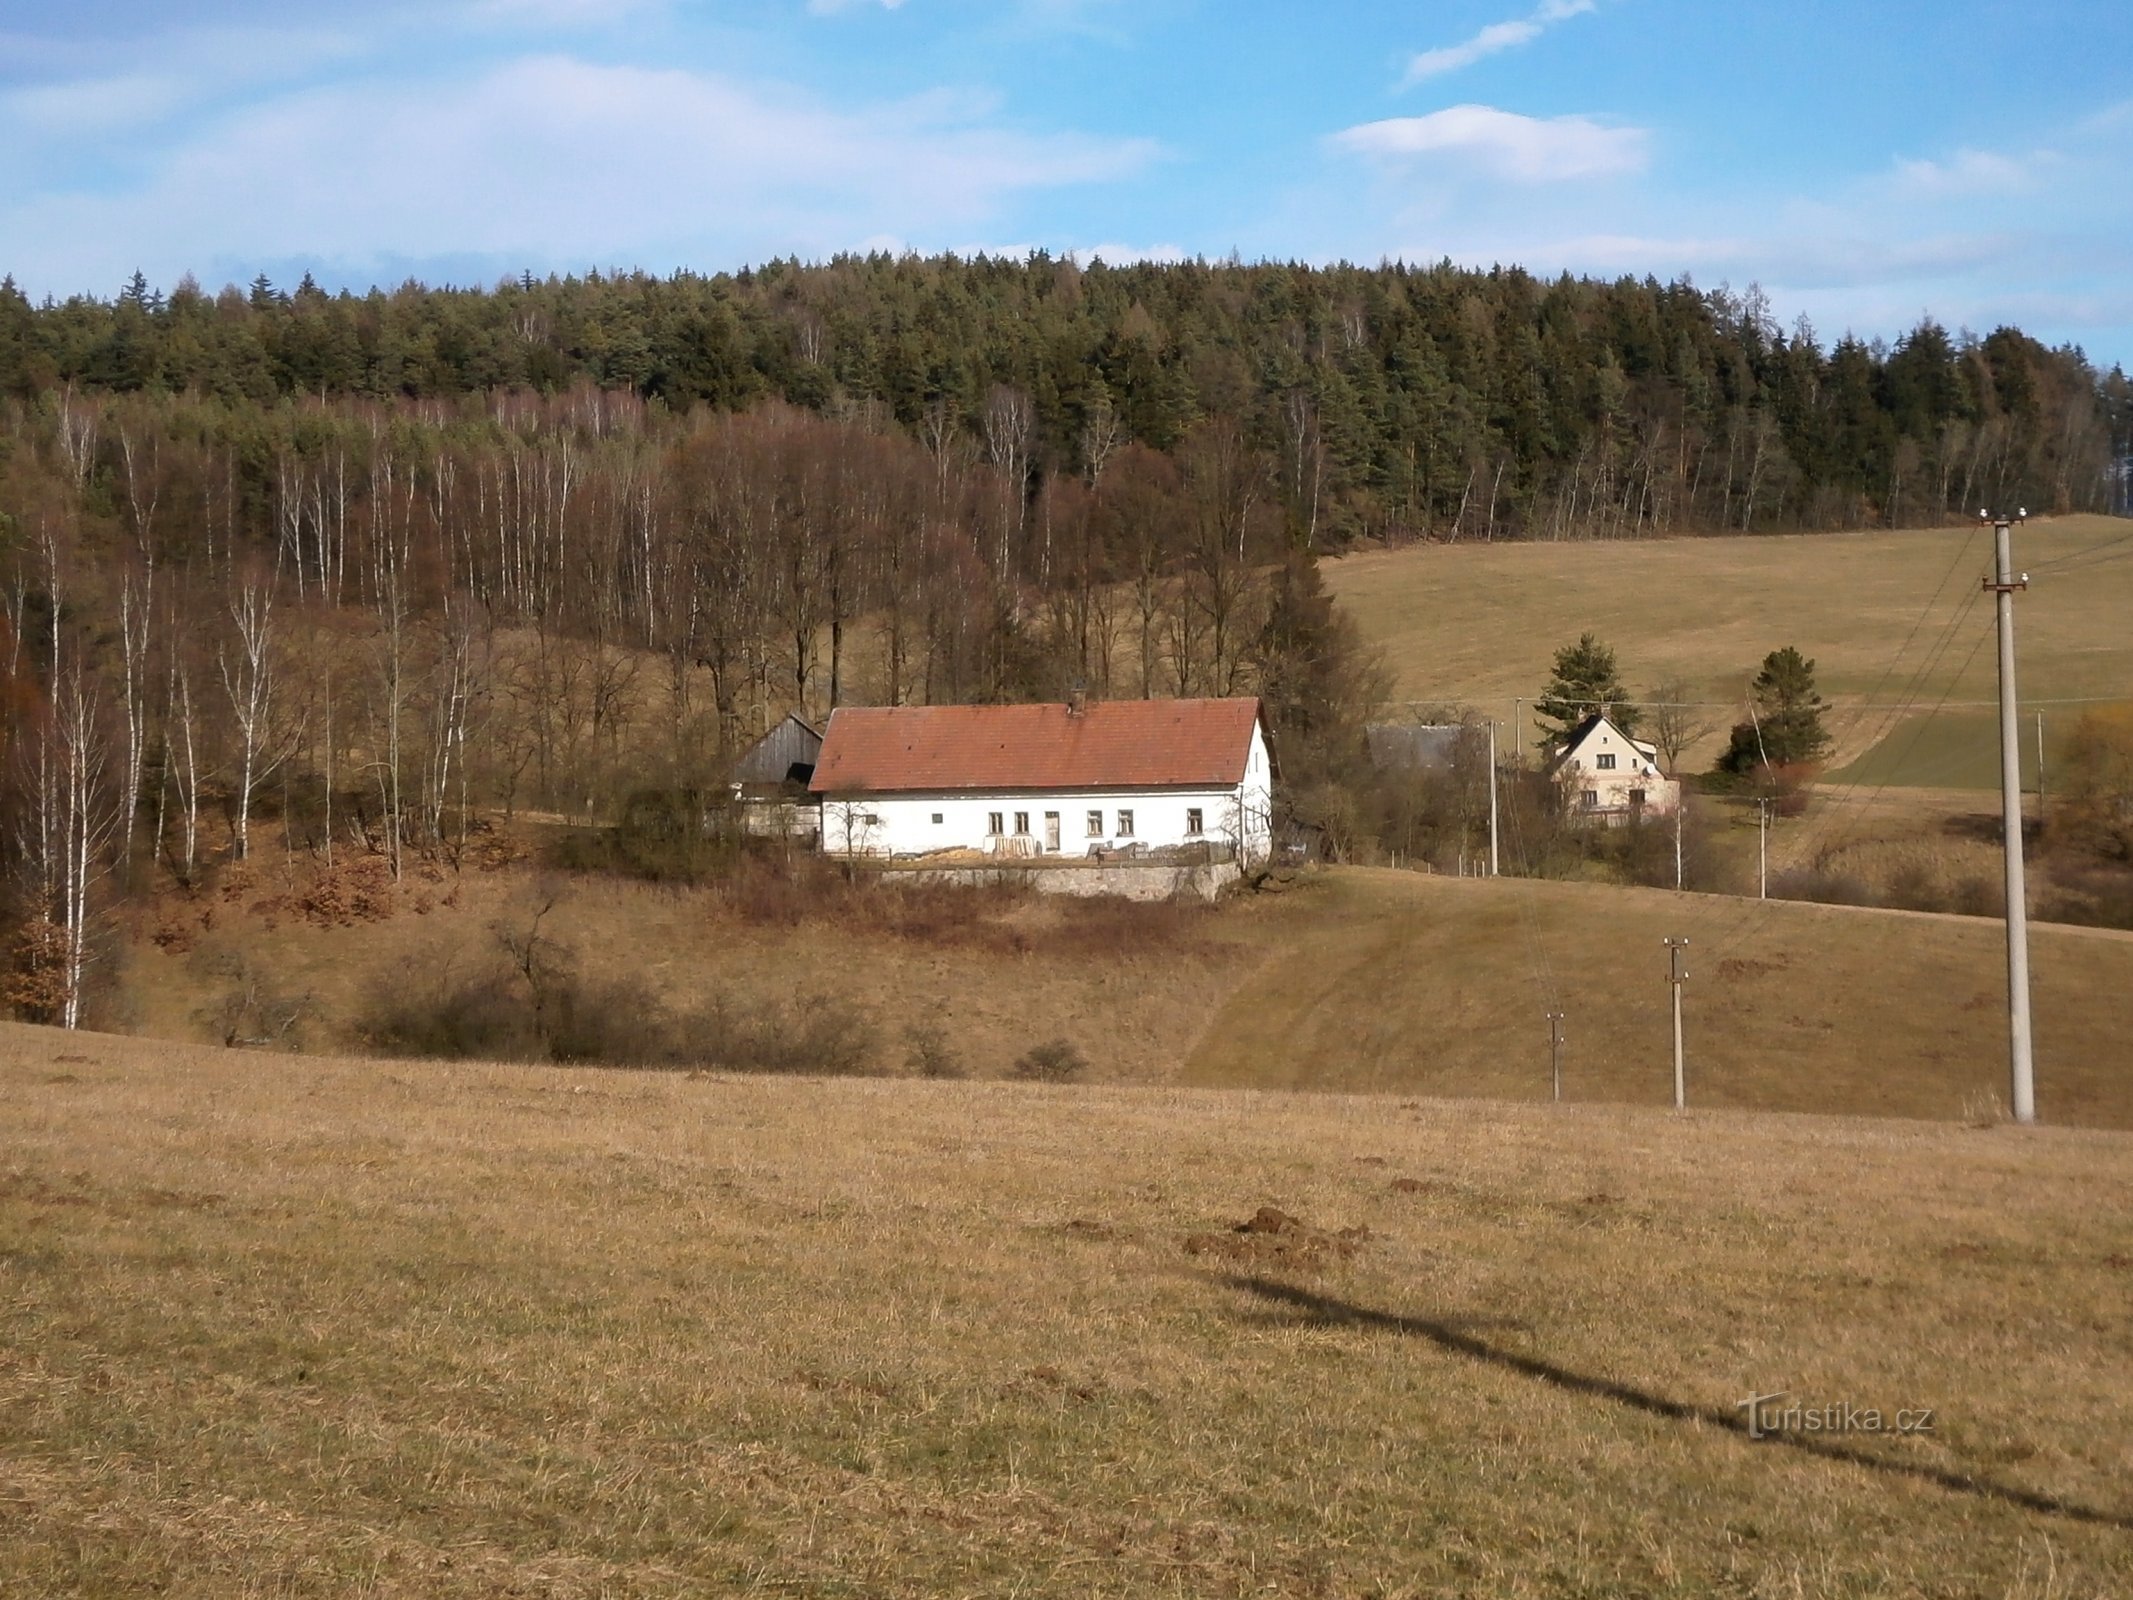 Havelovice một phần của Svobodné